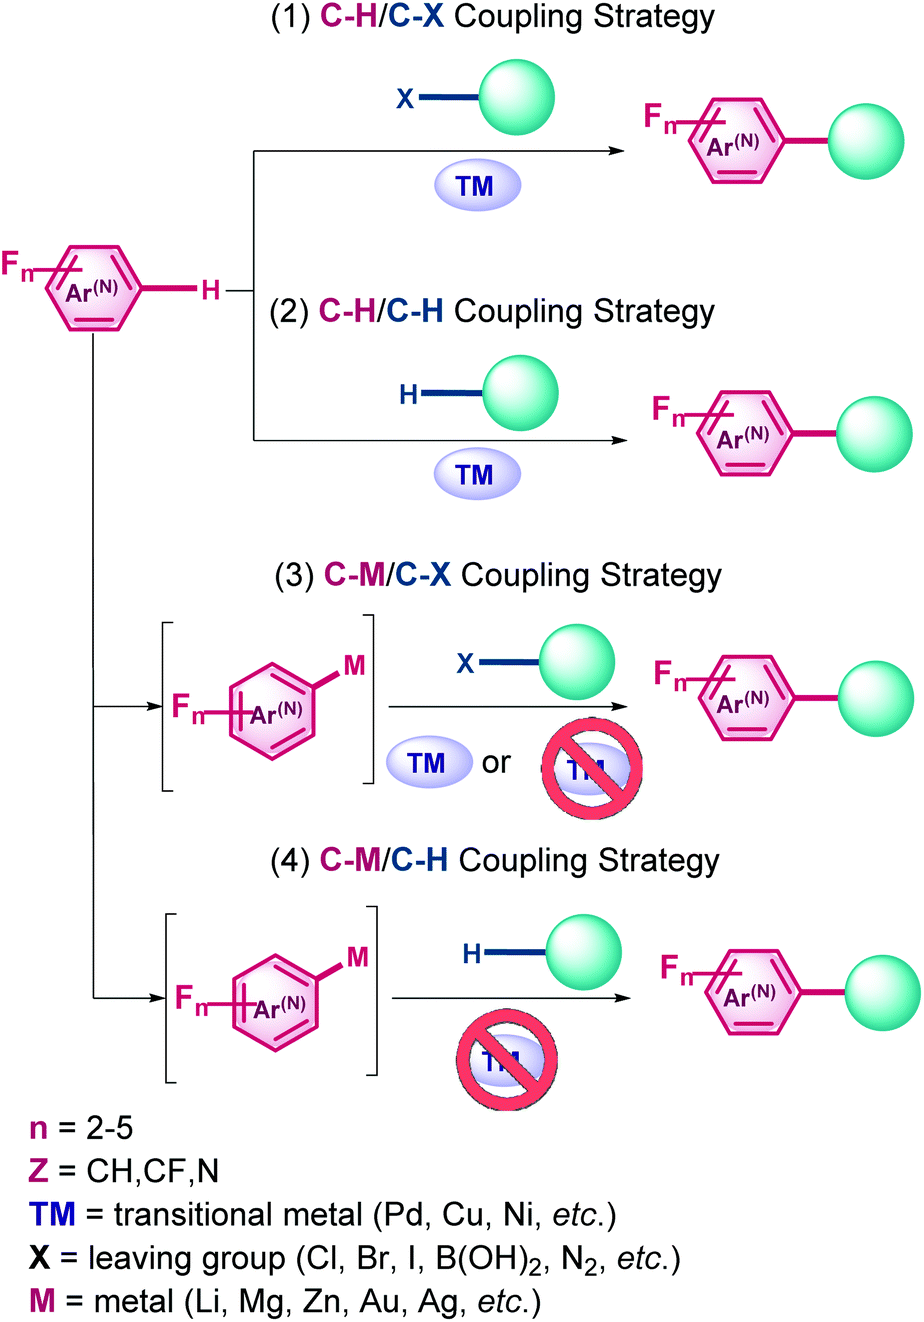 Recent Advances In The Functionalization Of Polyfluoro Aza Aromatics Via C C Coupling Strategies Organic Biomolecular Chemistry Rsc Publishing Doi 10 1039 D1obg